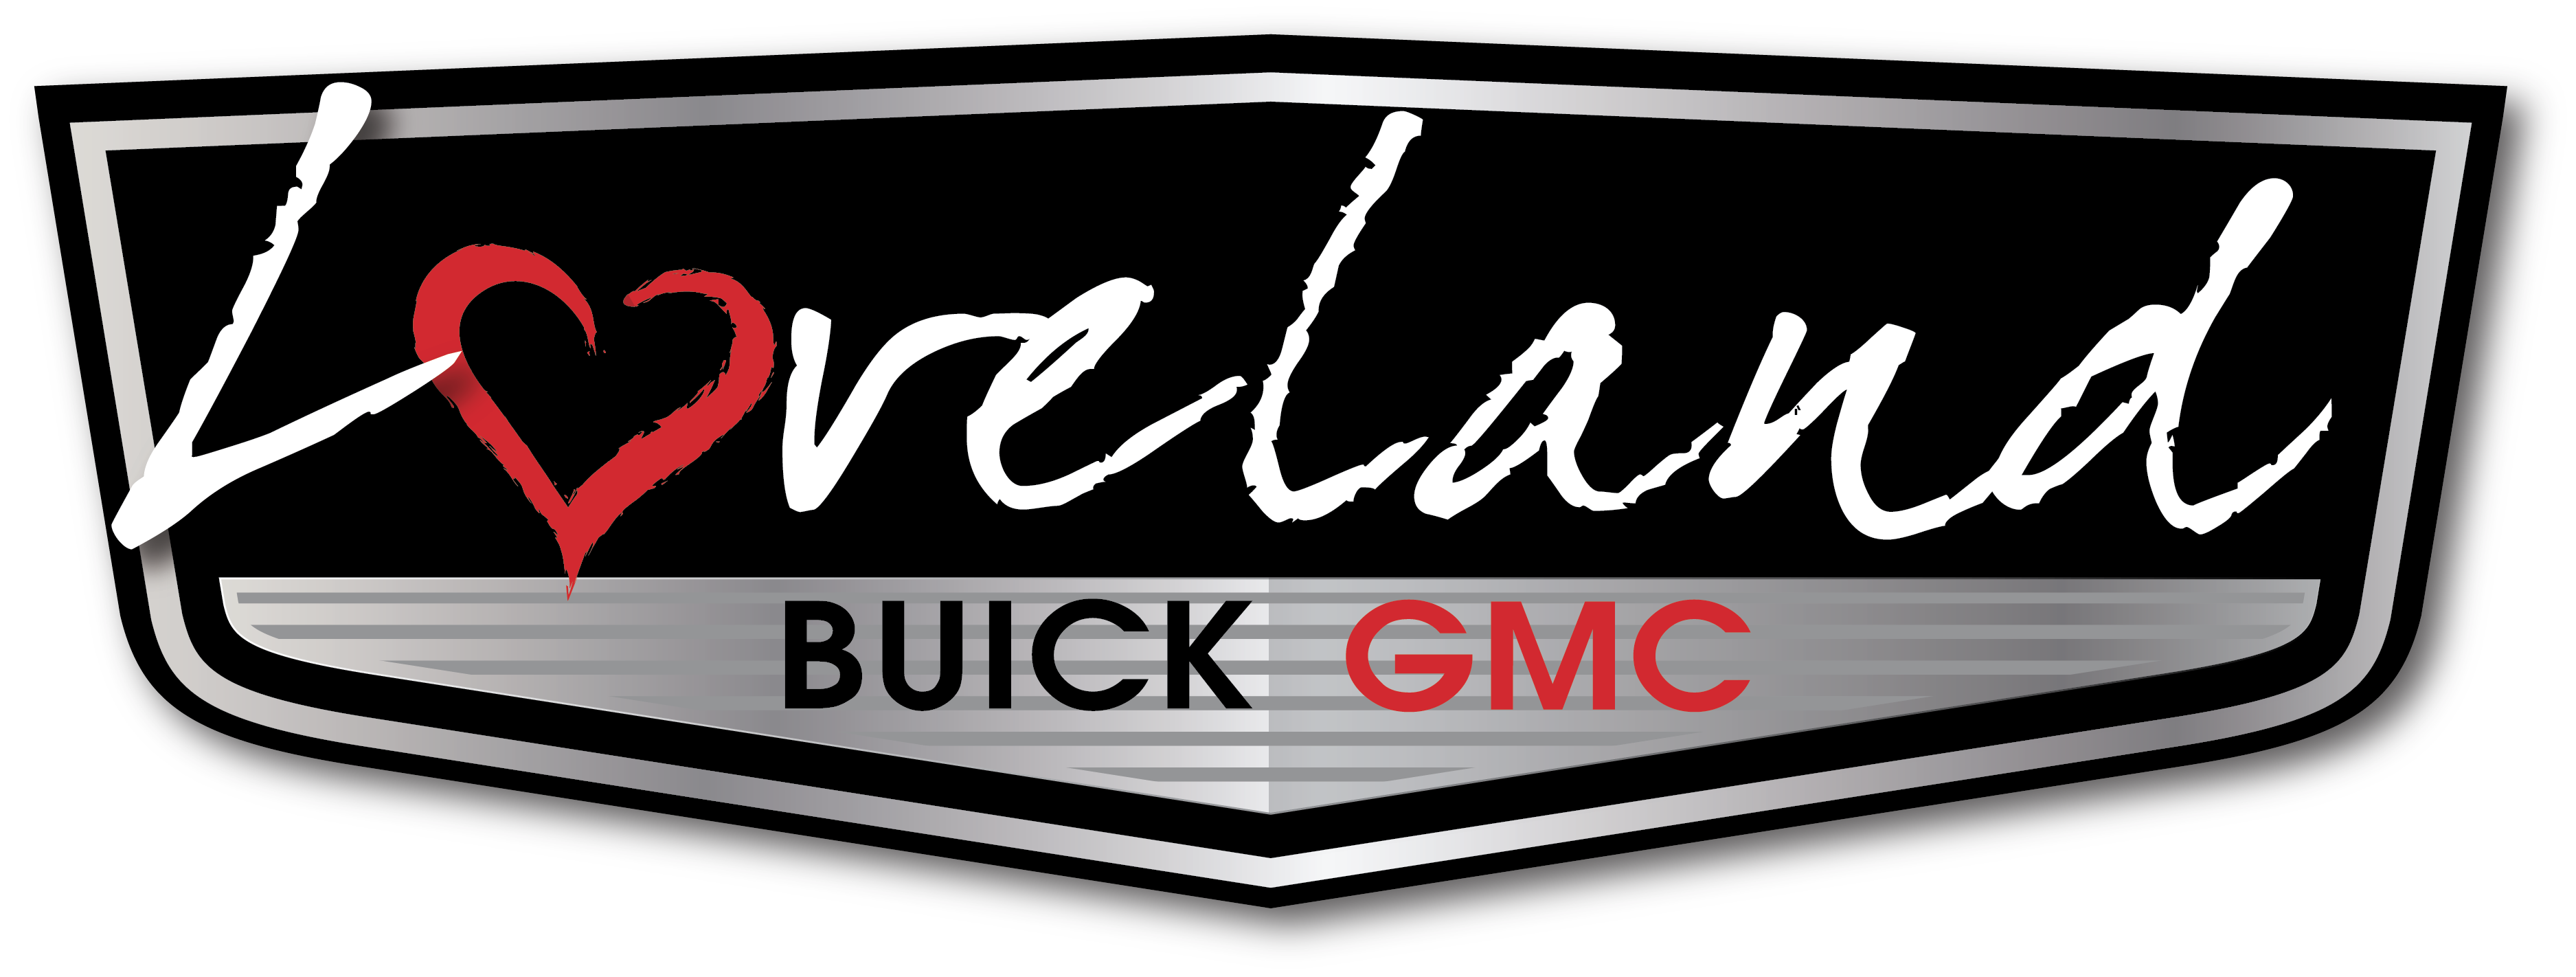 Loveland Buick GMC LOGO-01.png